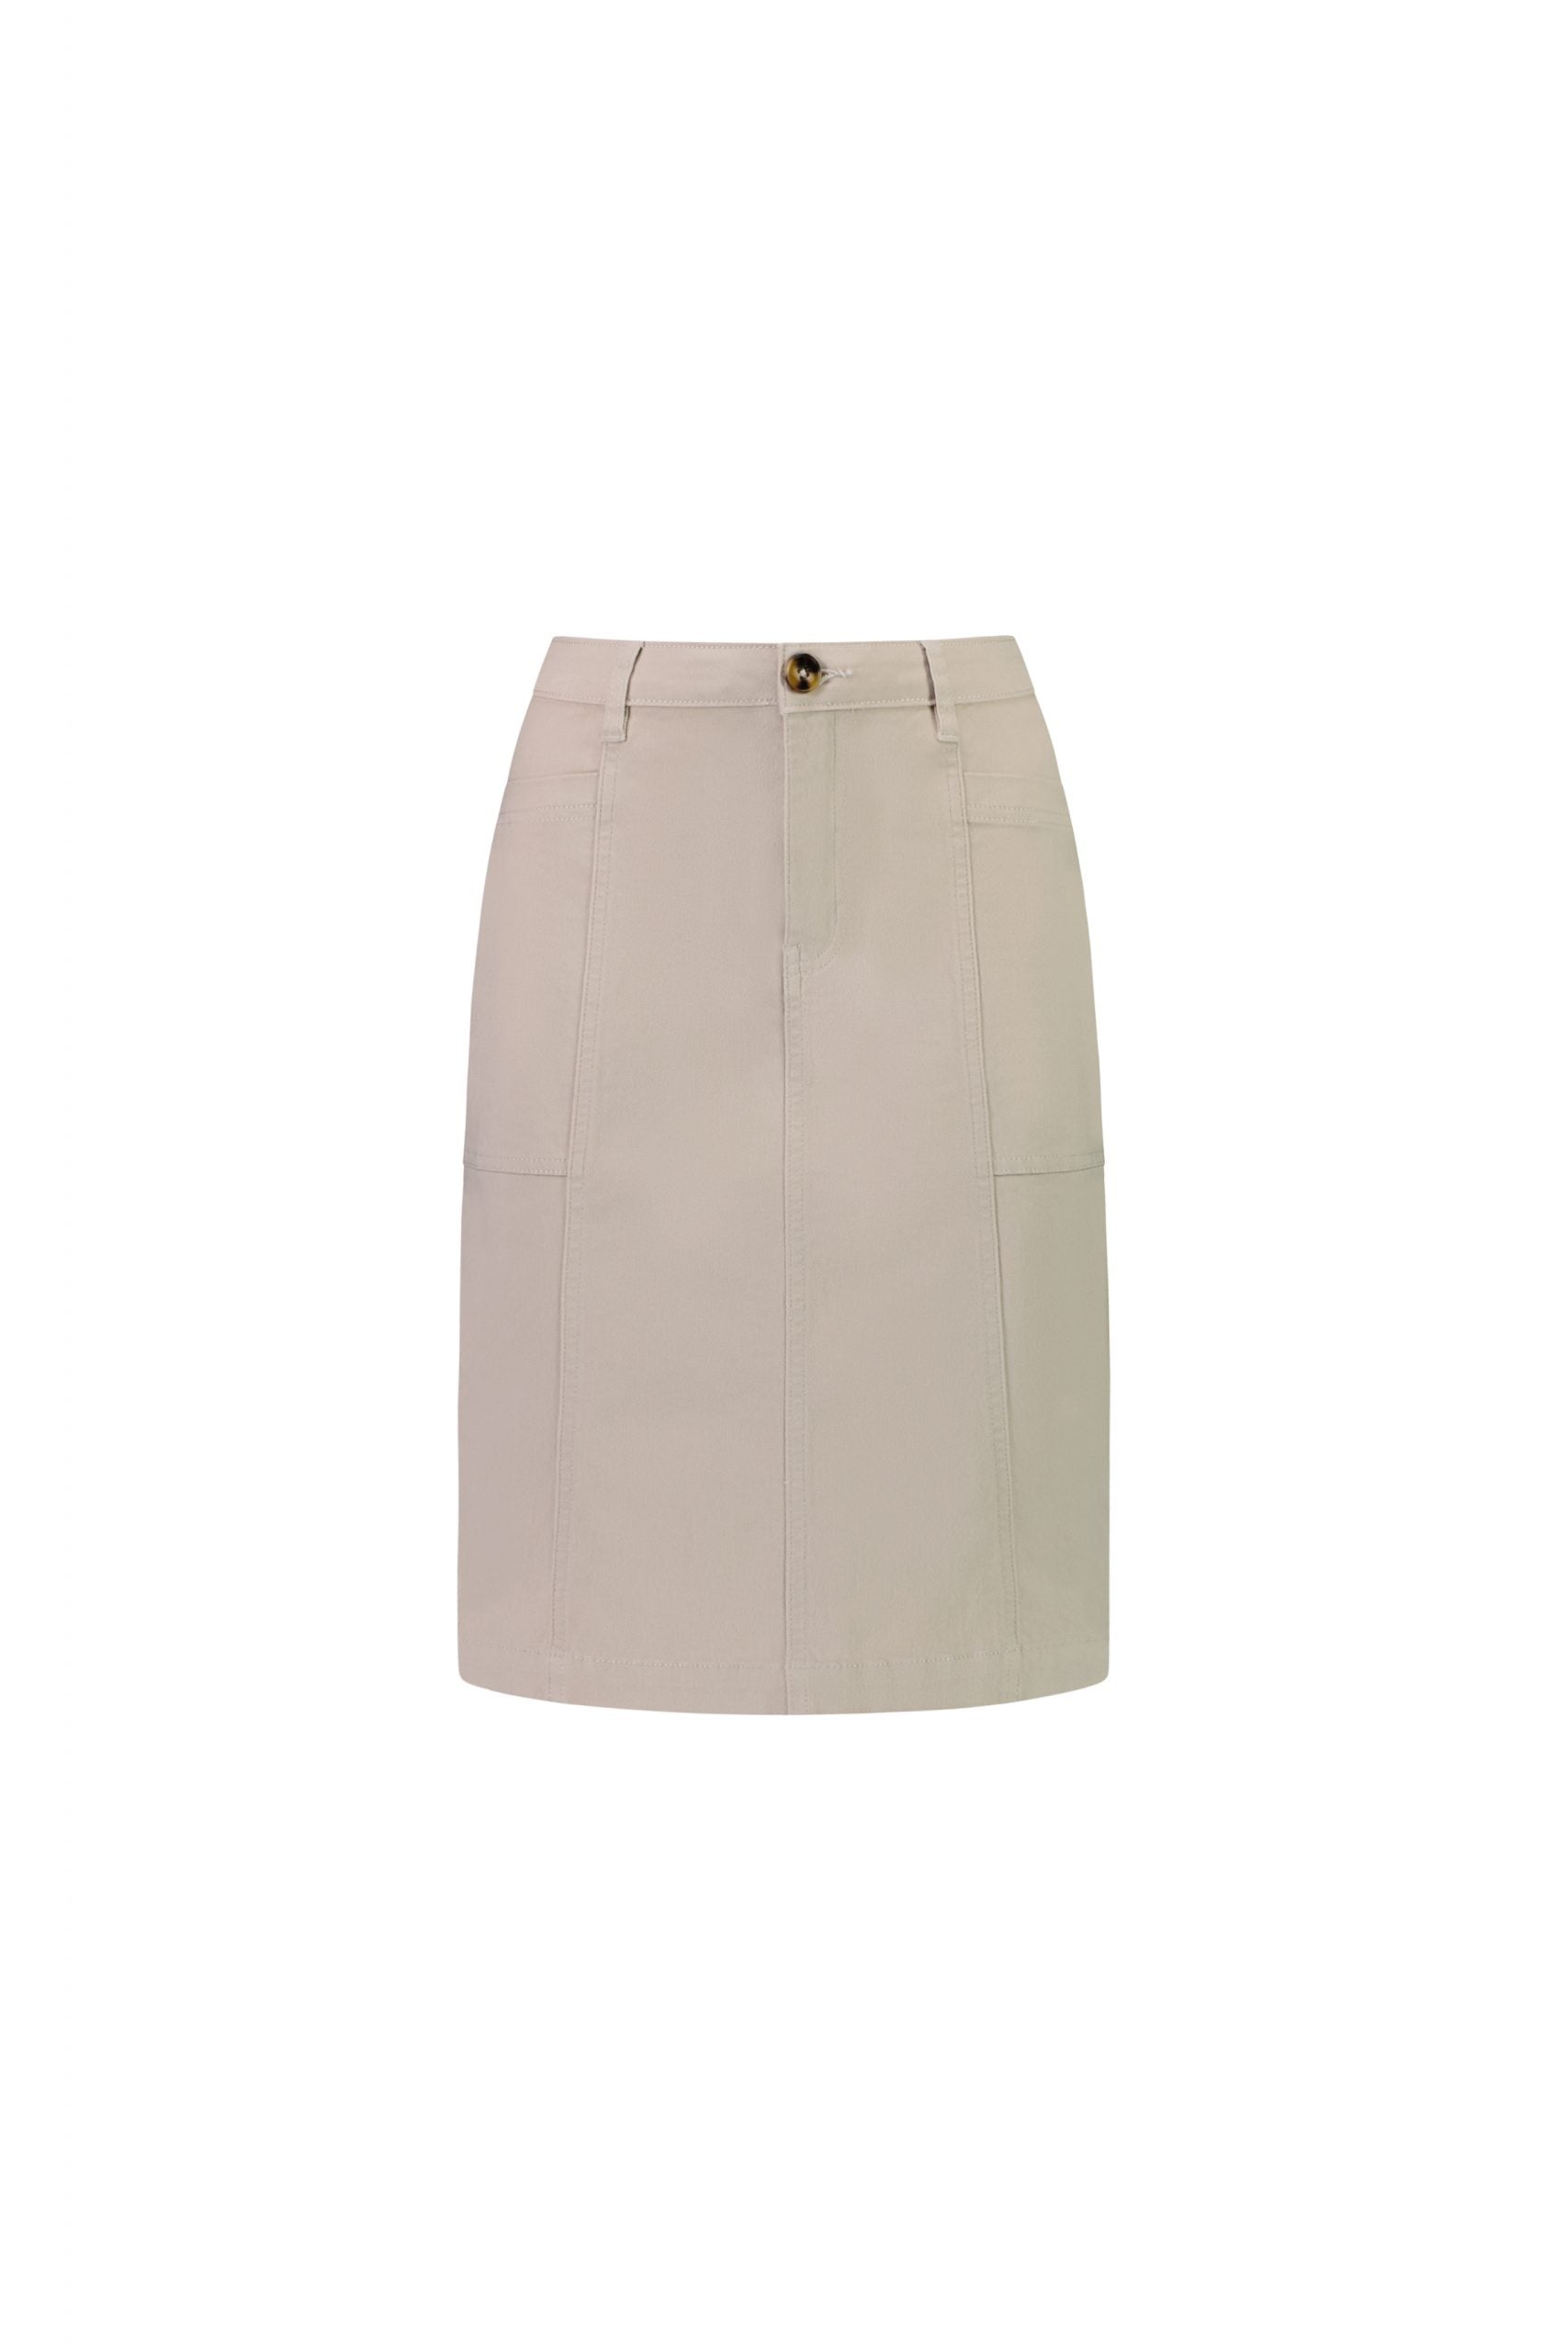 Cotton Drill Skirt with Back Vent | Mushroom - Beechworth Emporium